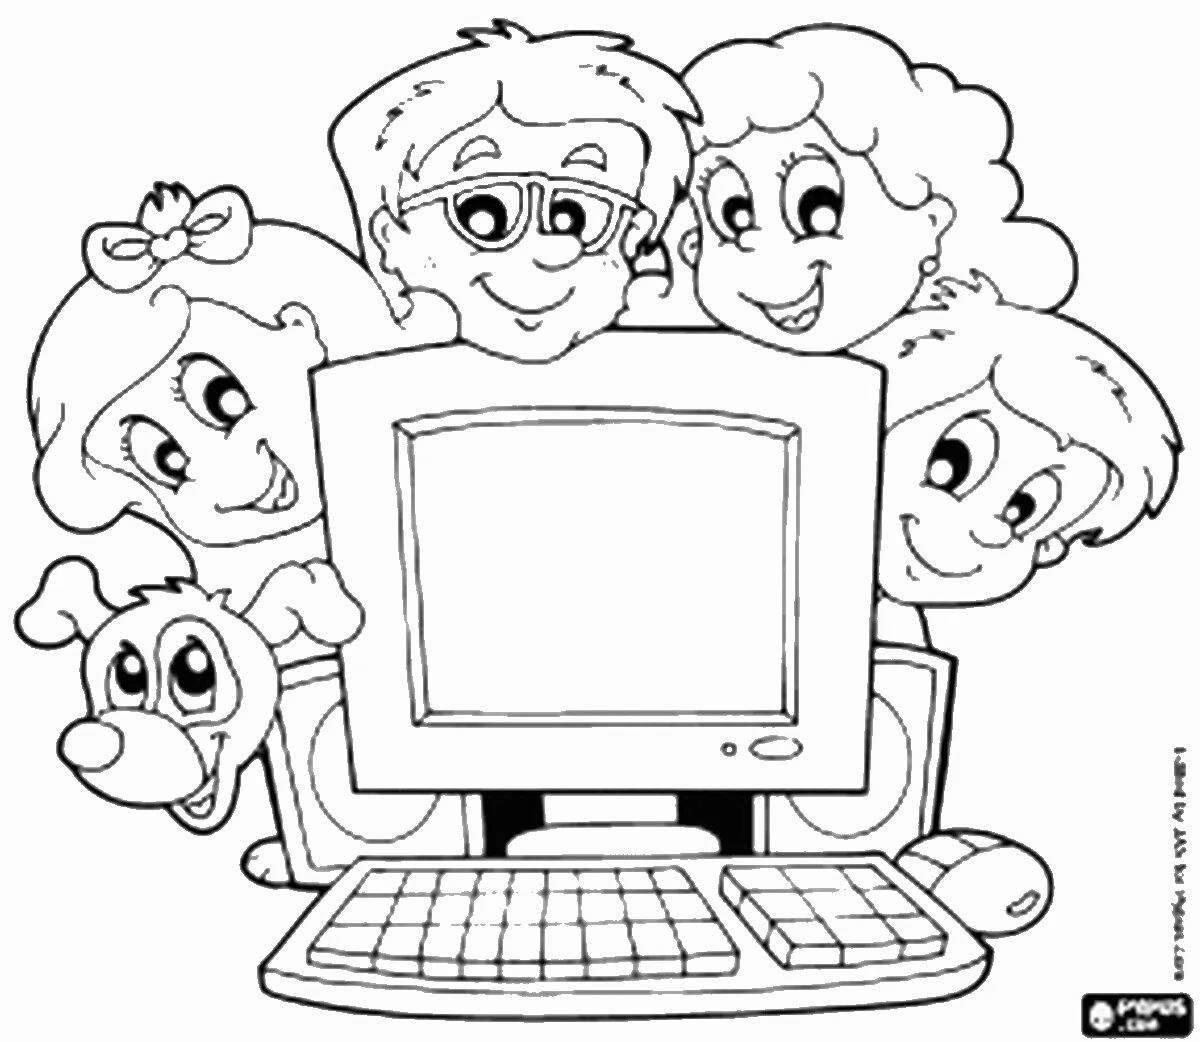 Safe internet for elementary school kids #19